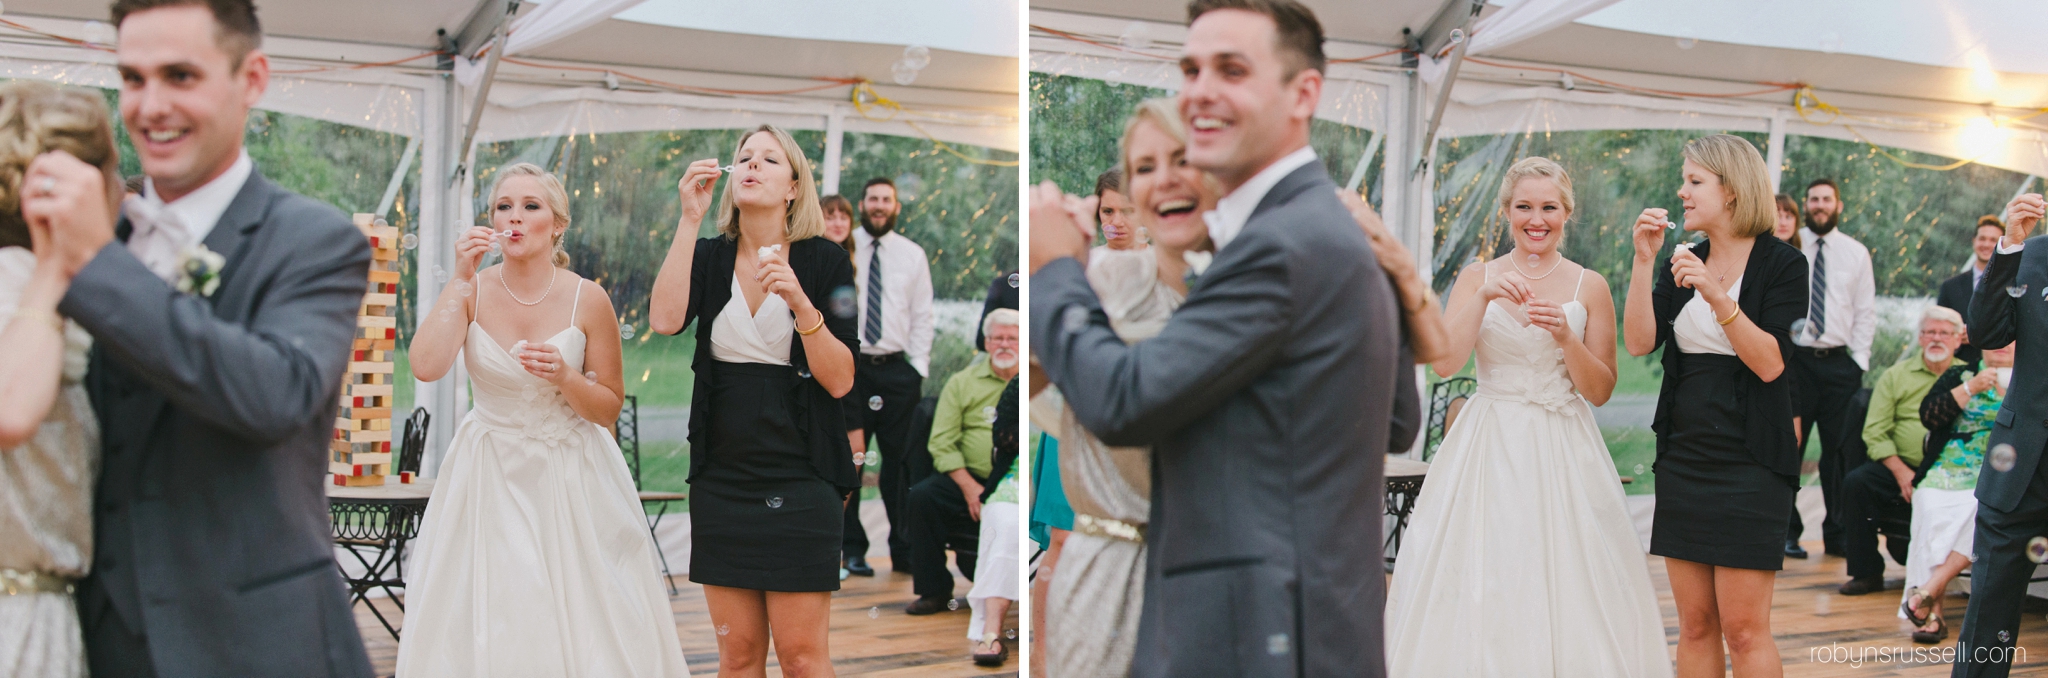 0879-bubbles-during-wedding-dance.jpg